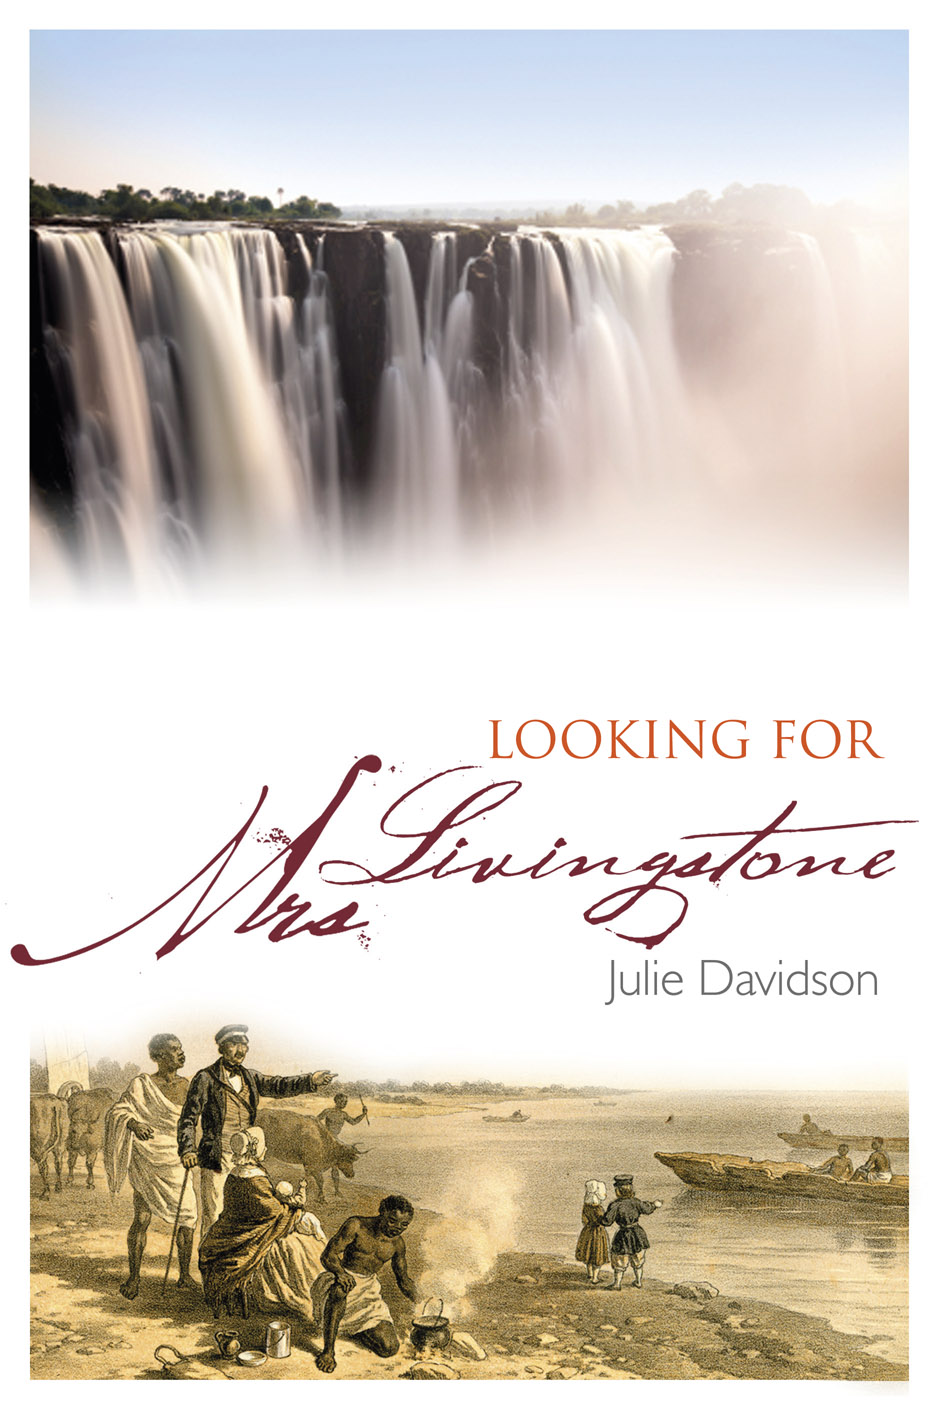 Looking for Mrs. Livingstone